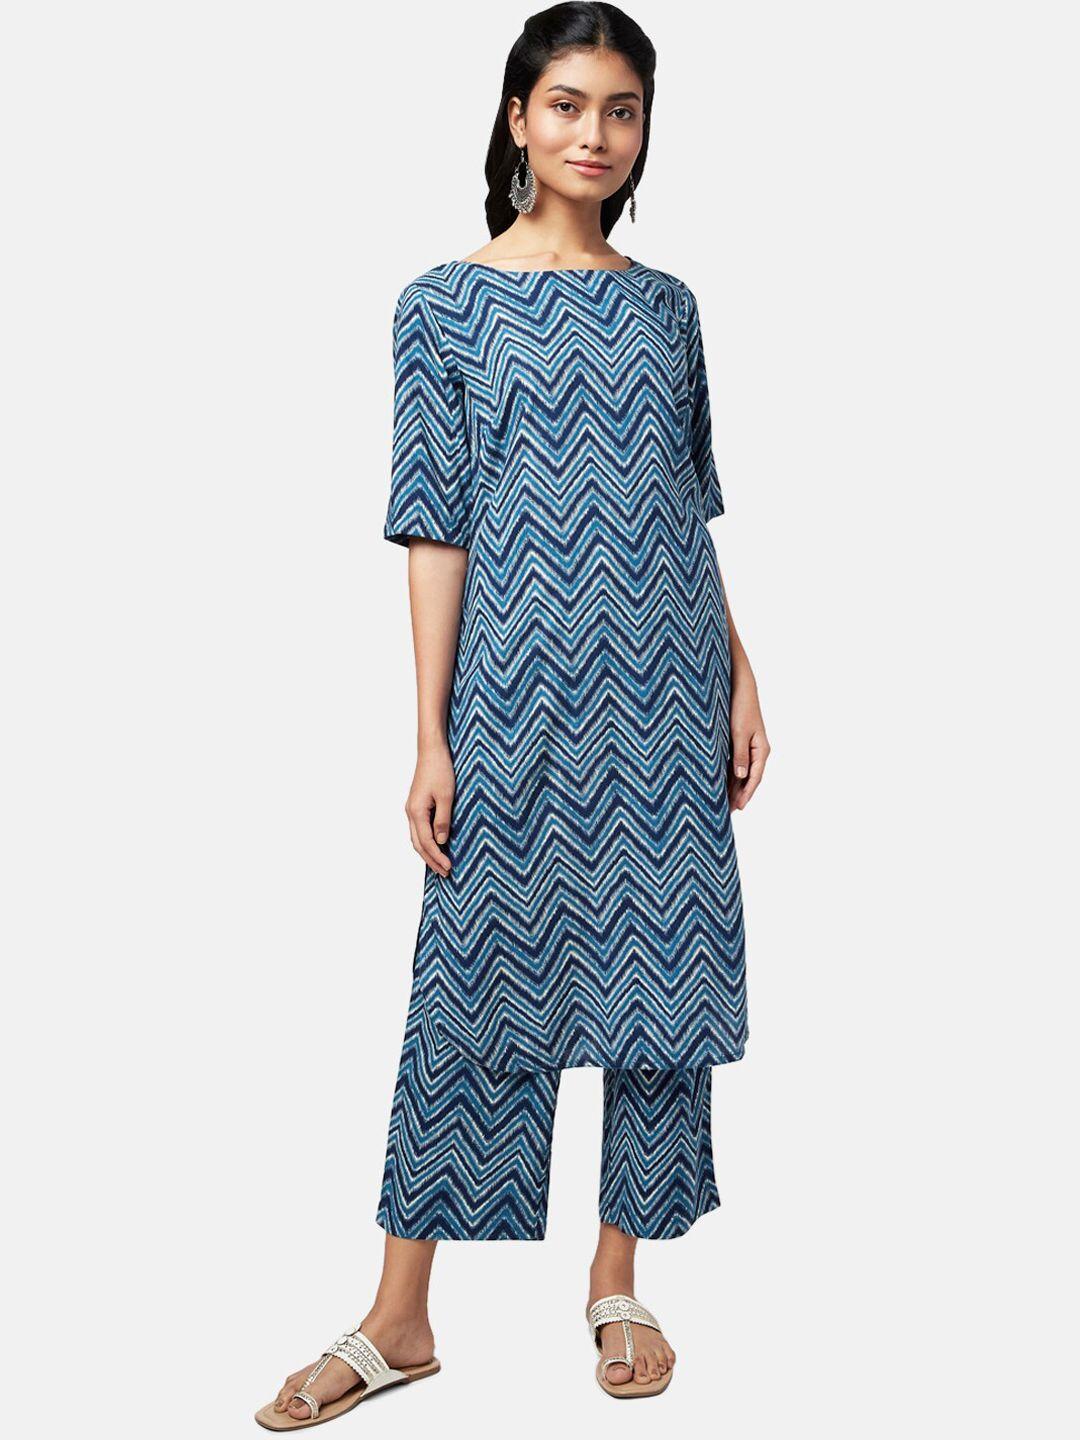 rangmanch-by-pantaloons-women-blue-printed-kurta-with-palazzos